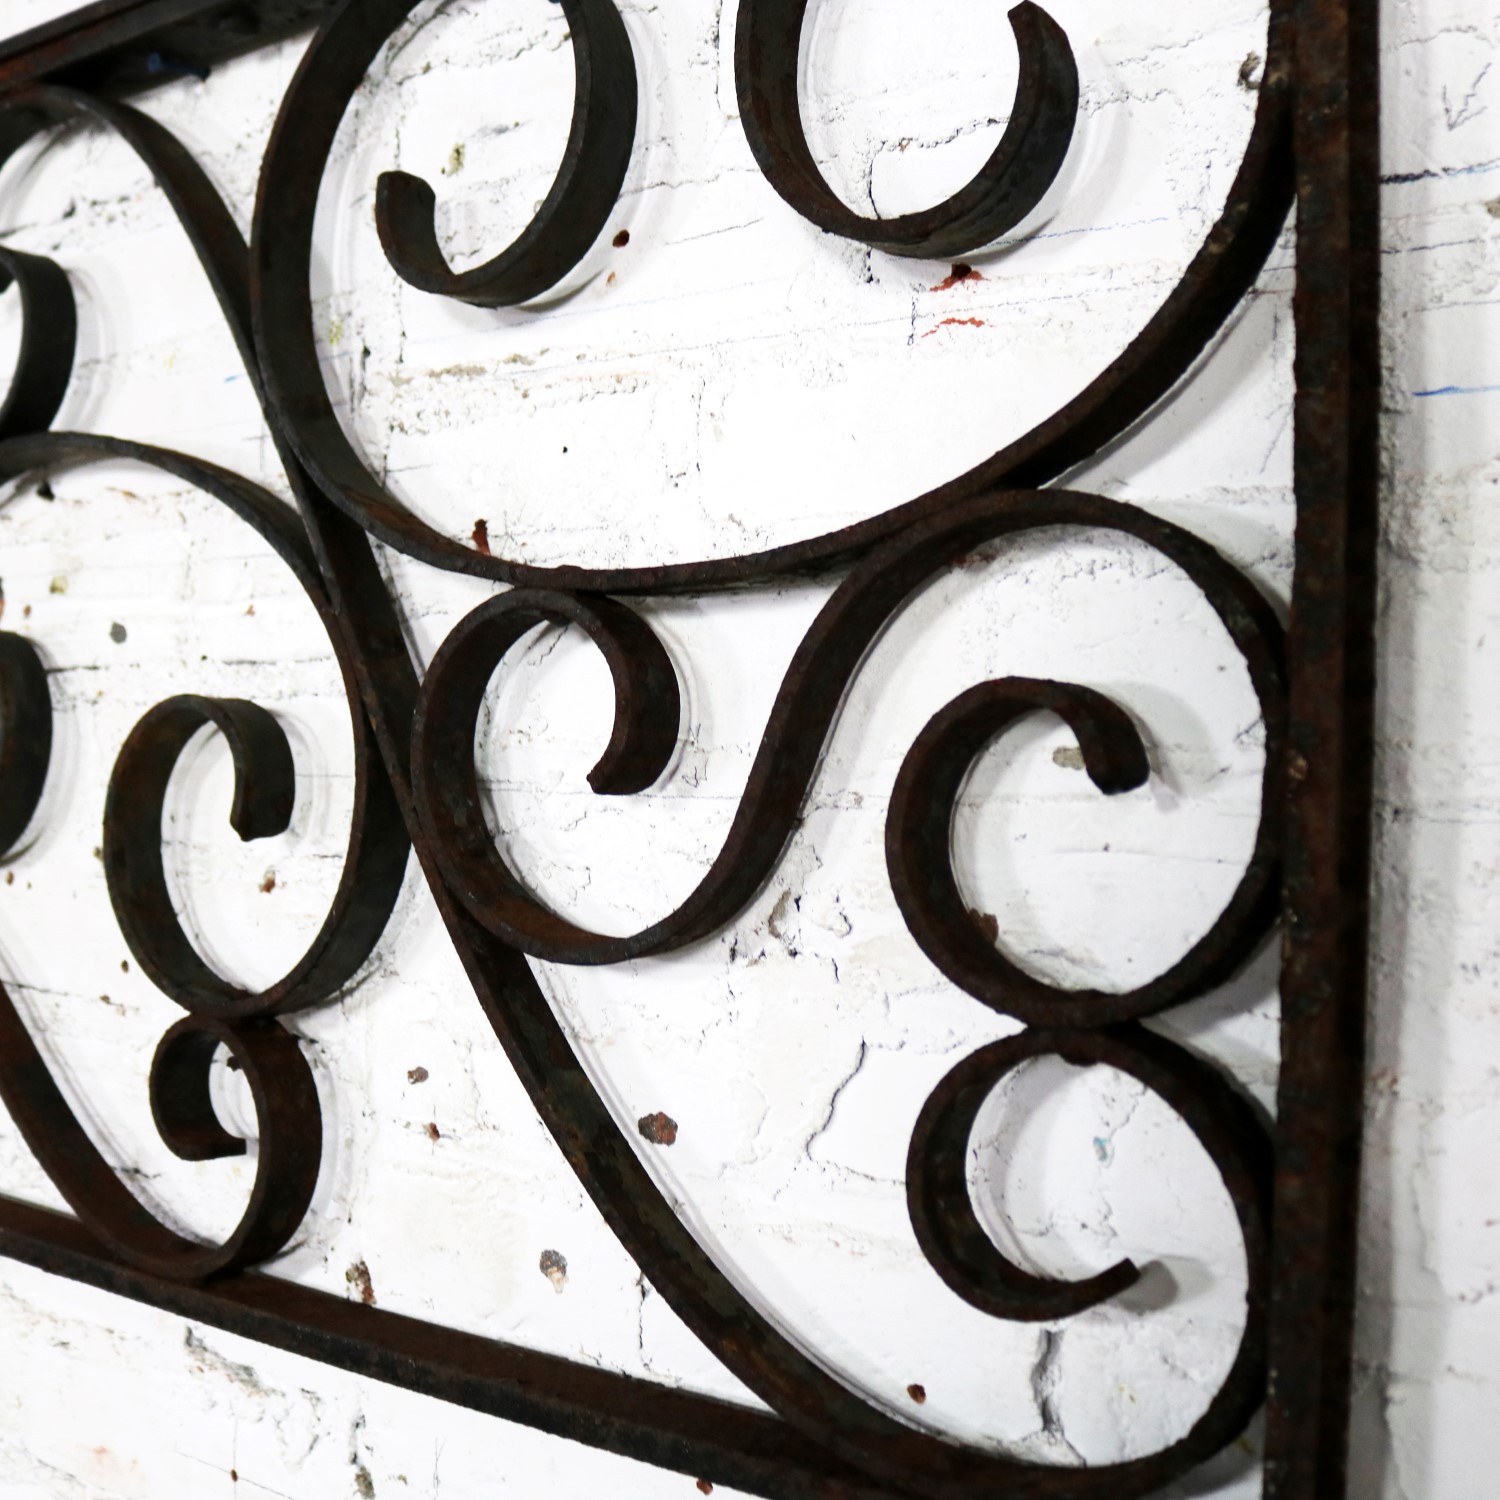 Antique Swirled Design Wrought Iron Railing Piece Trellis or Fence Section